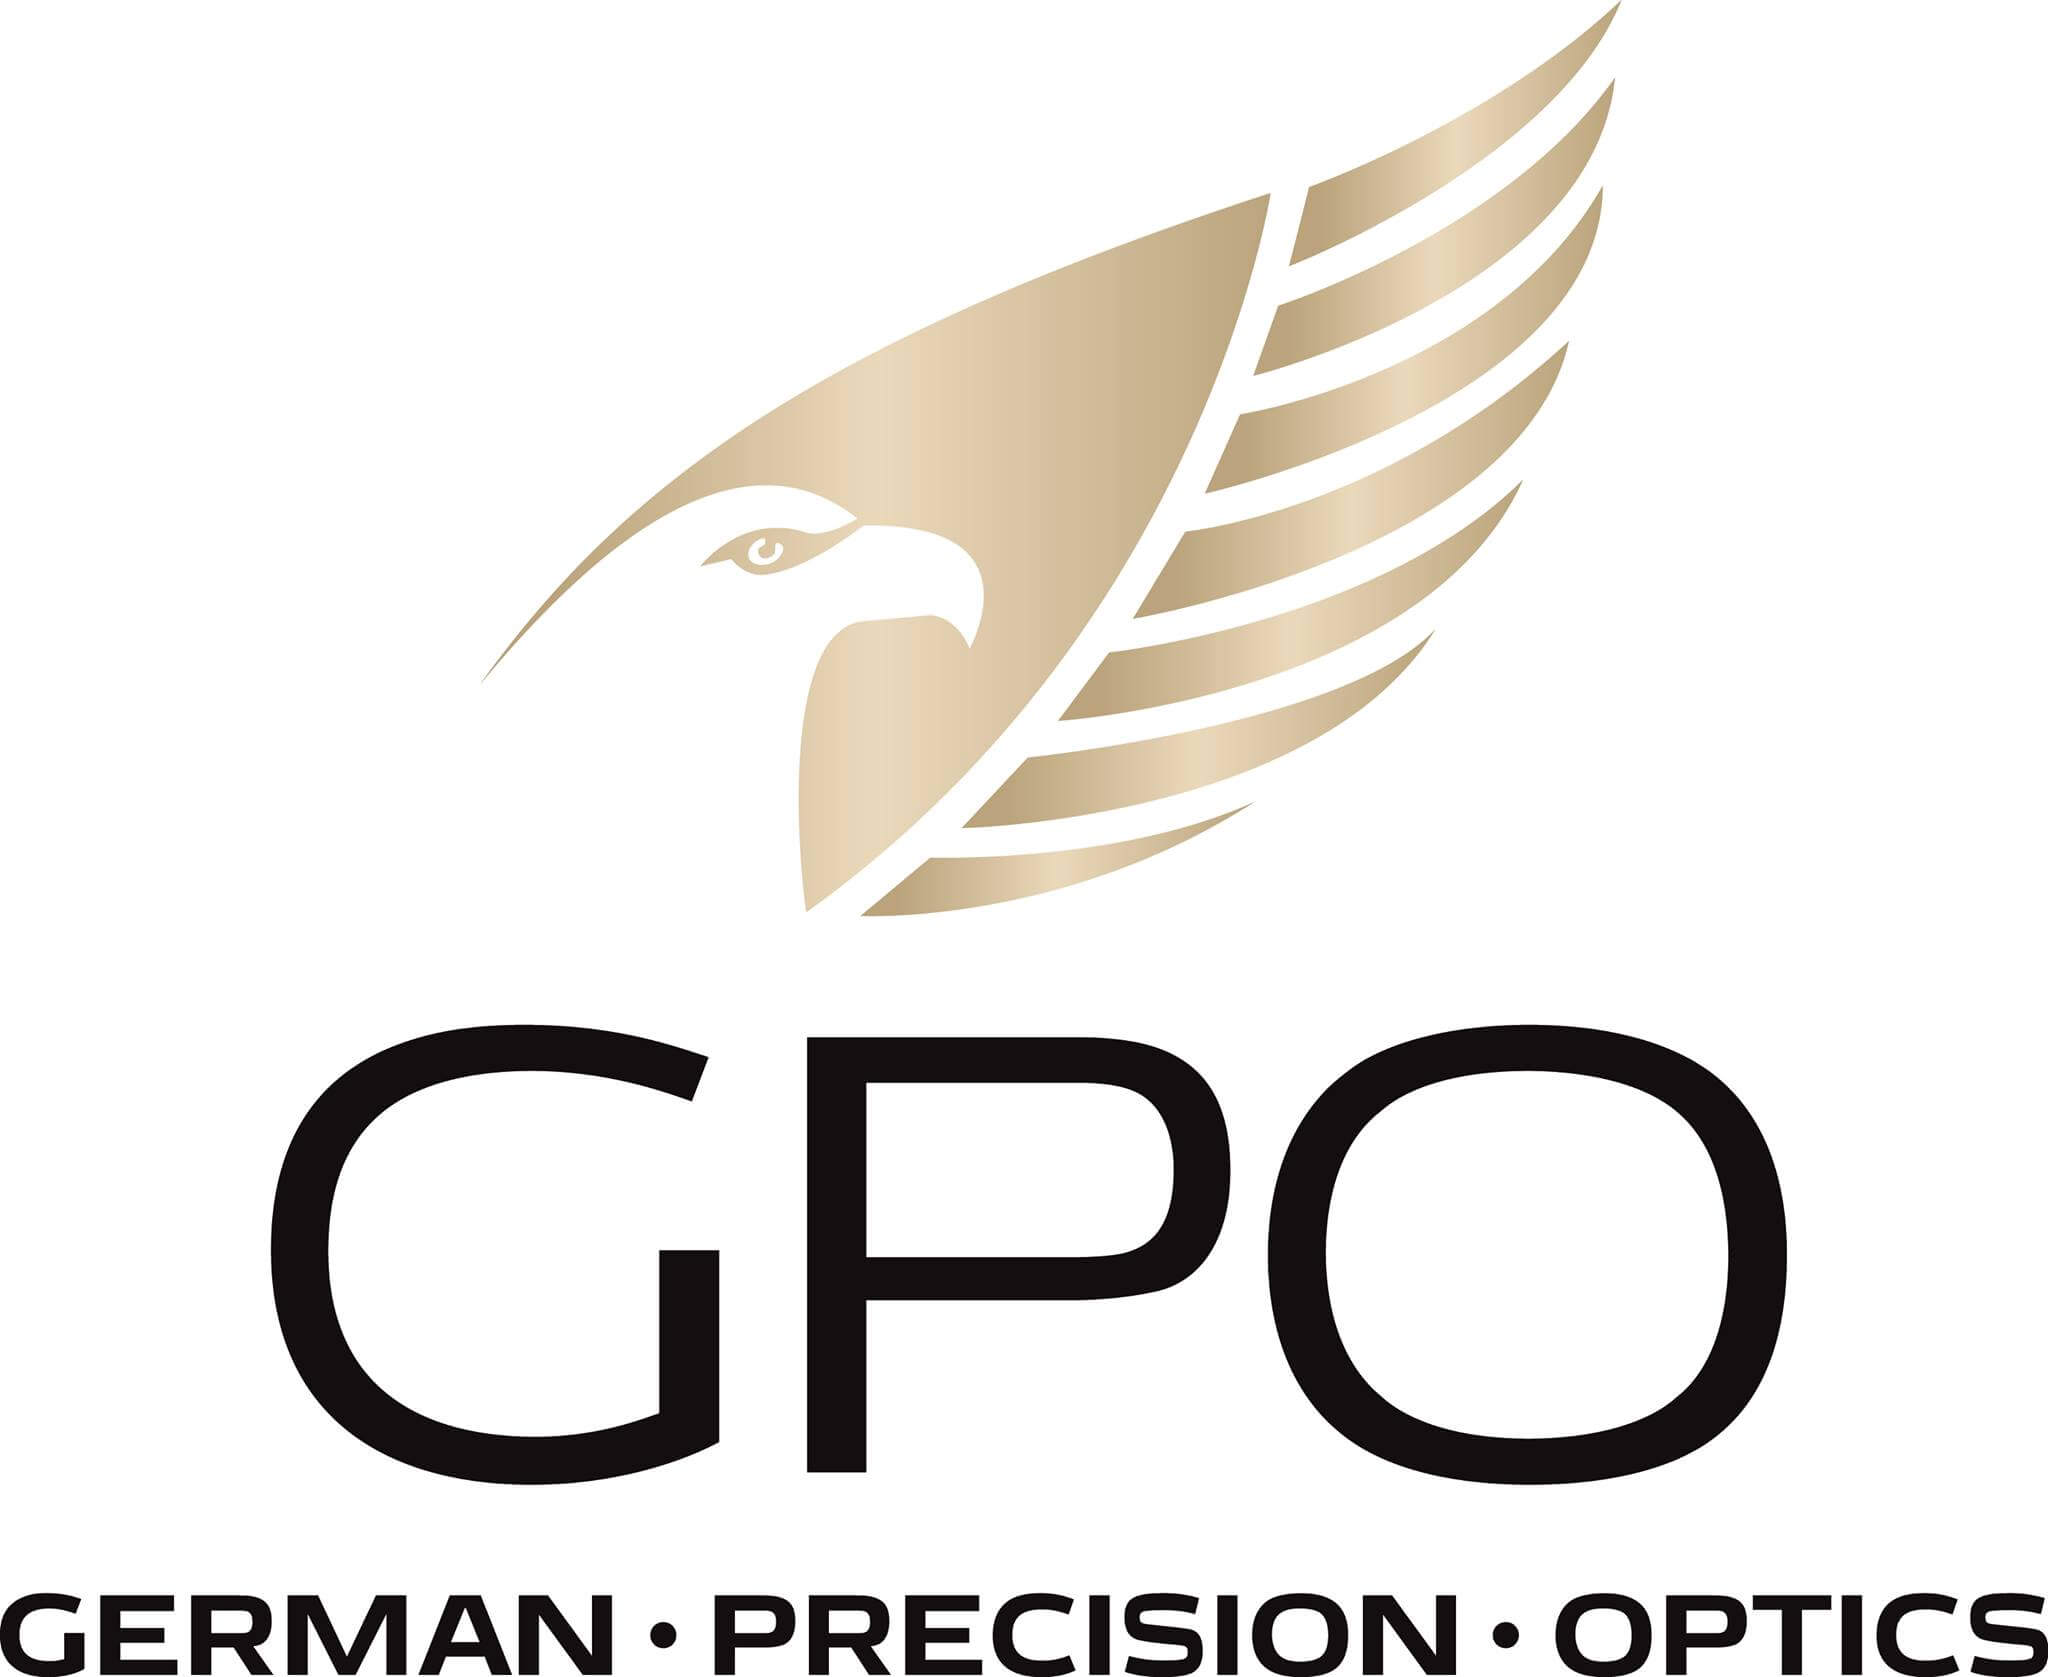 Introducing German Precision Optics - Gravel Agency